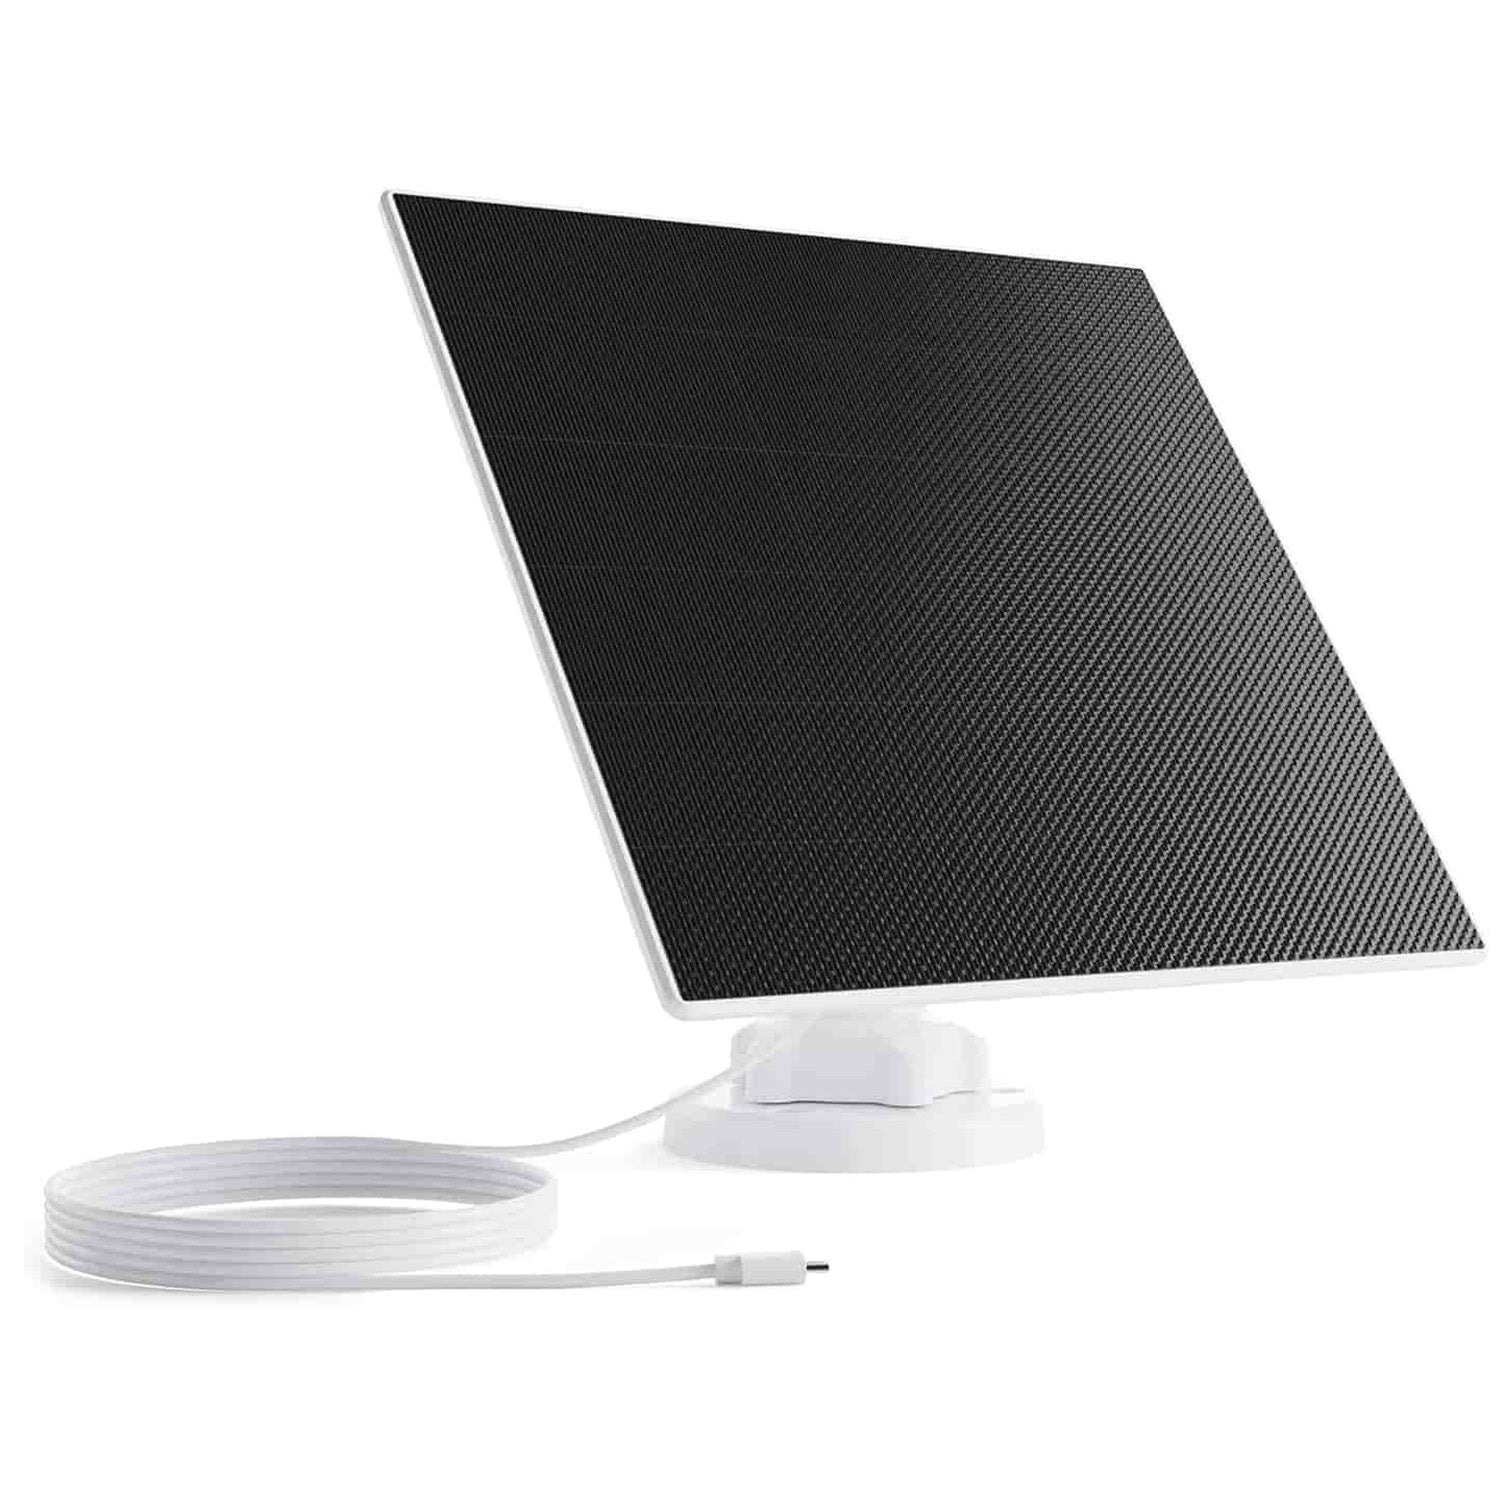 Dzees-Green-Power-Eco-Friendly-Solar-Panel